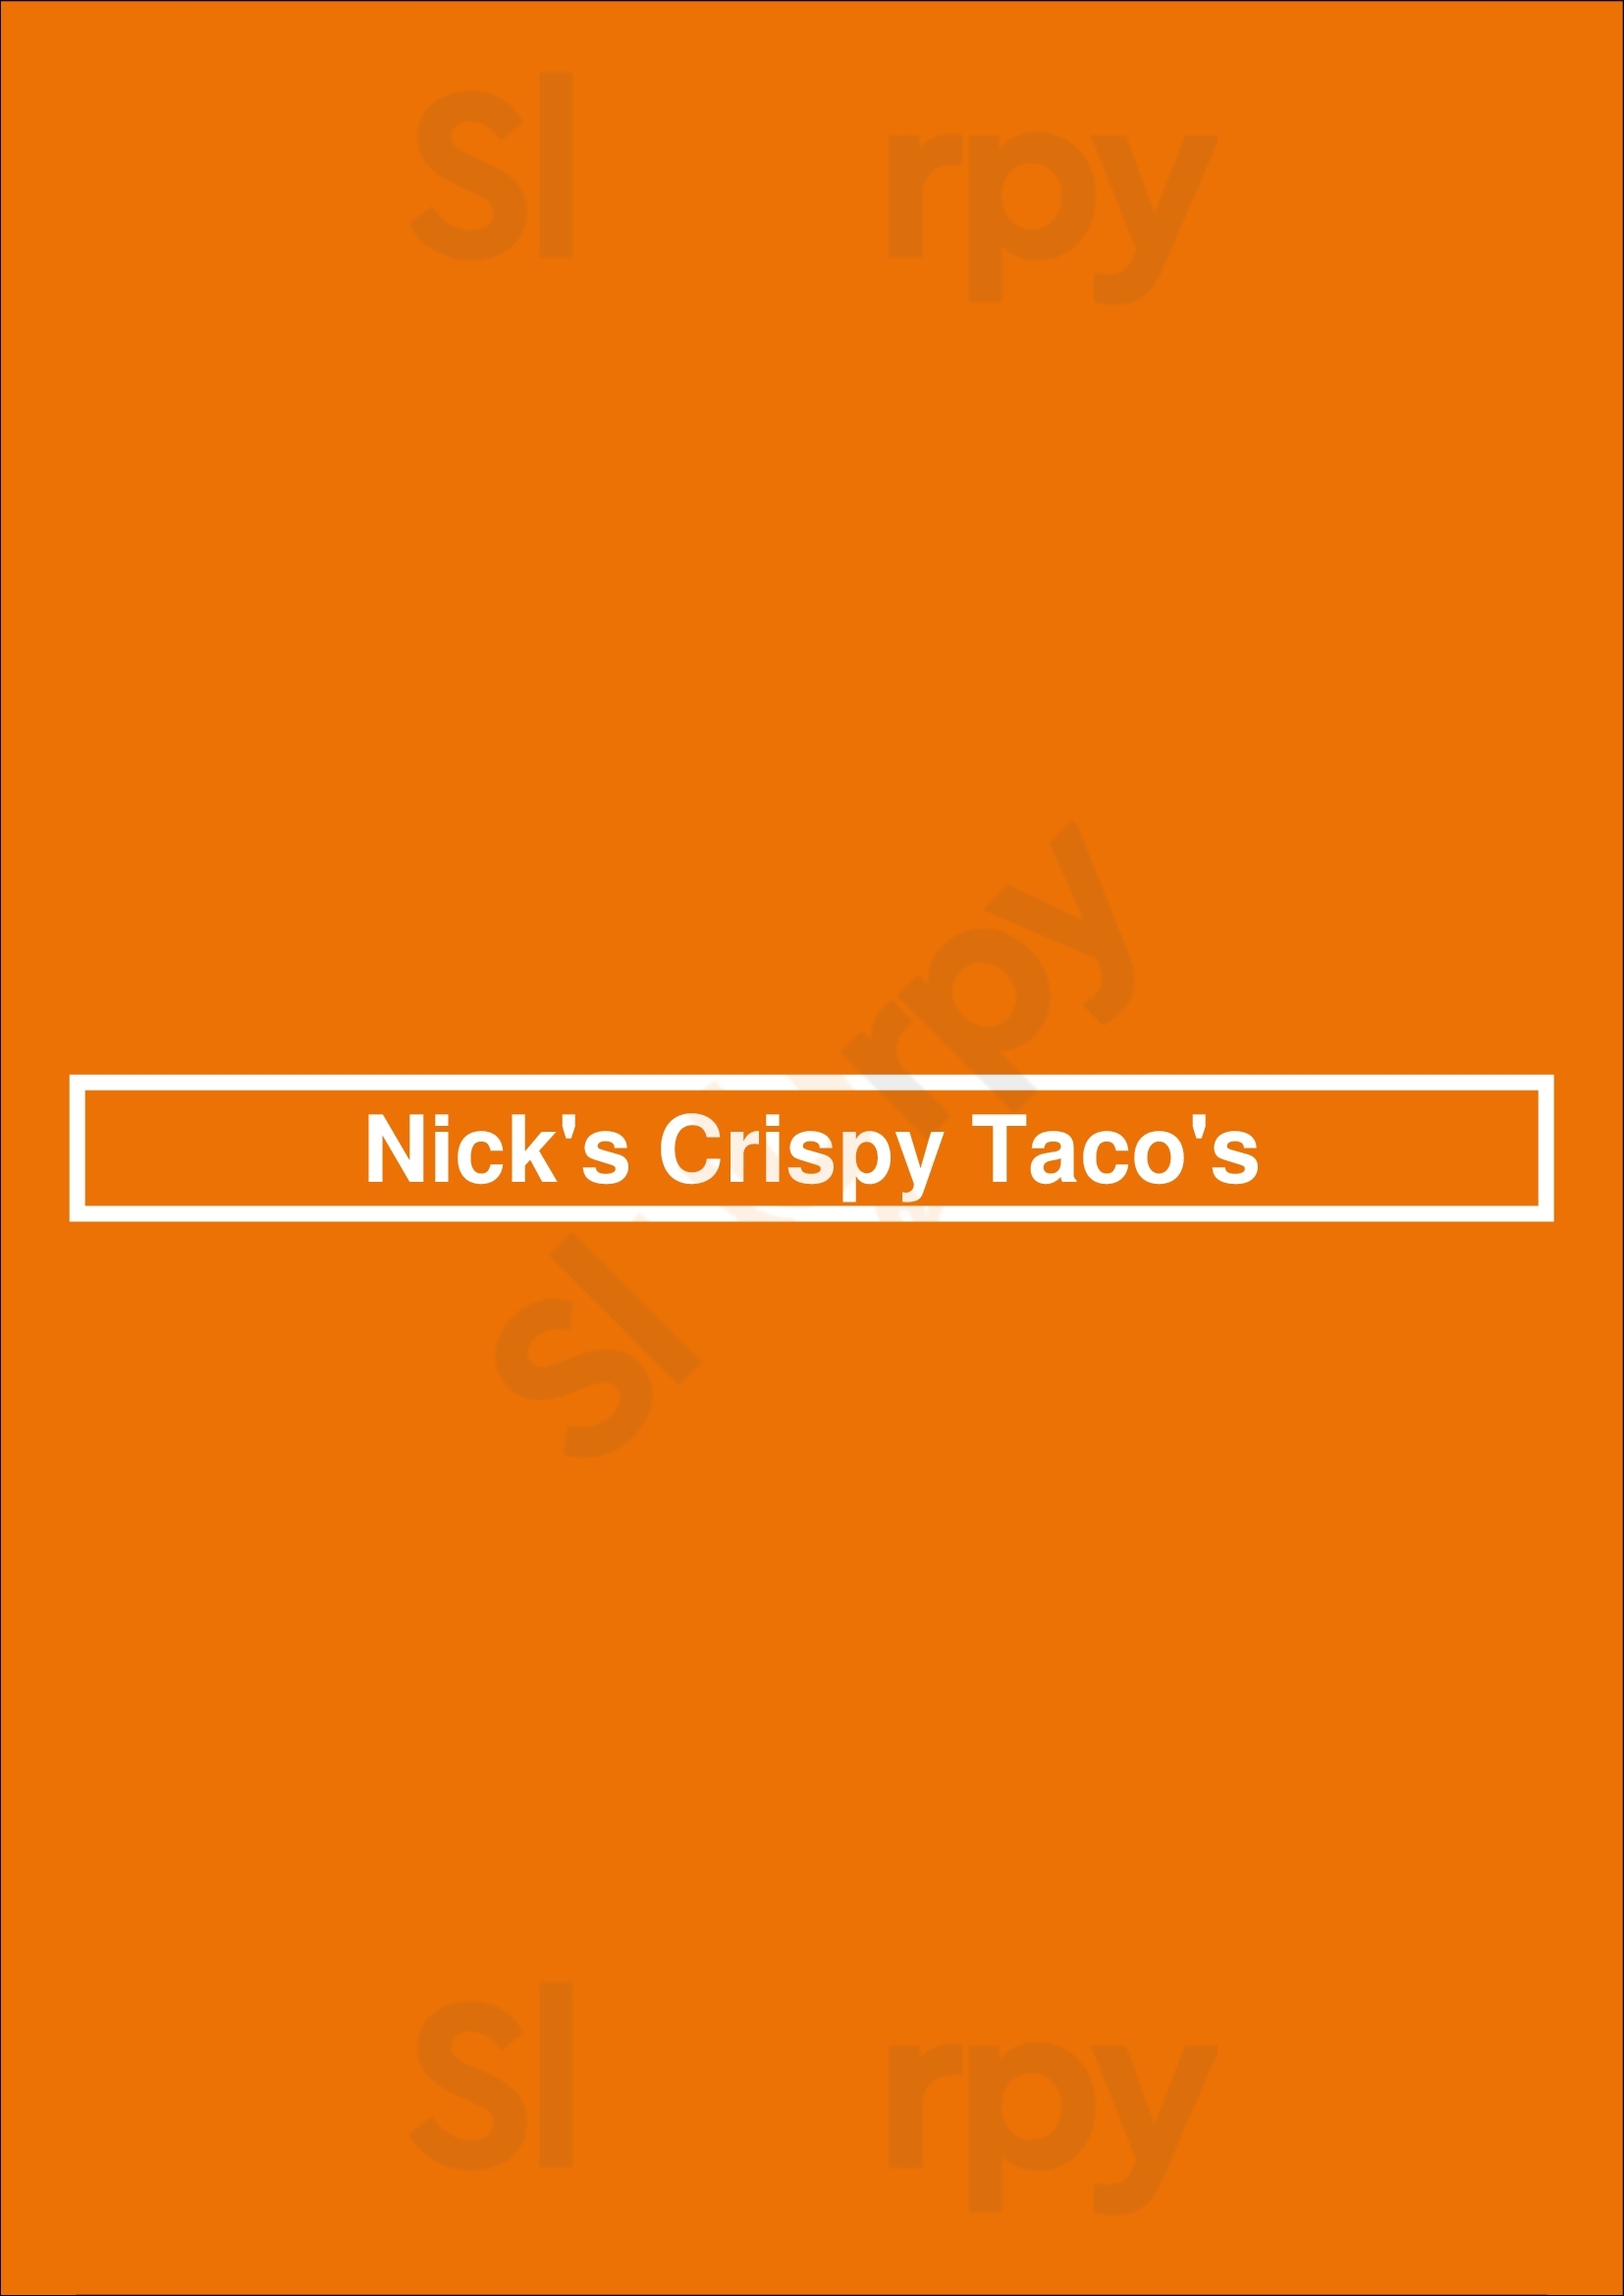 Nick's Crispy Taco's San Francisco Menu - 1